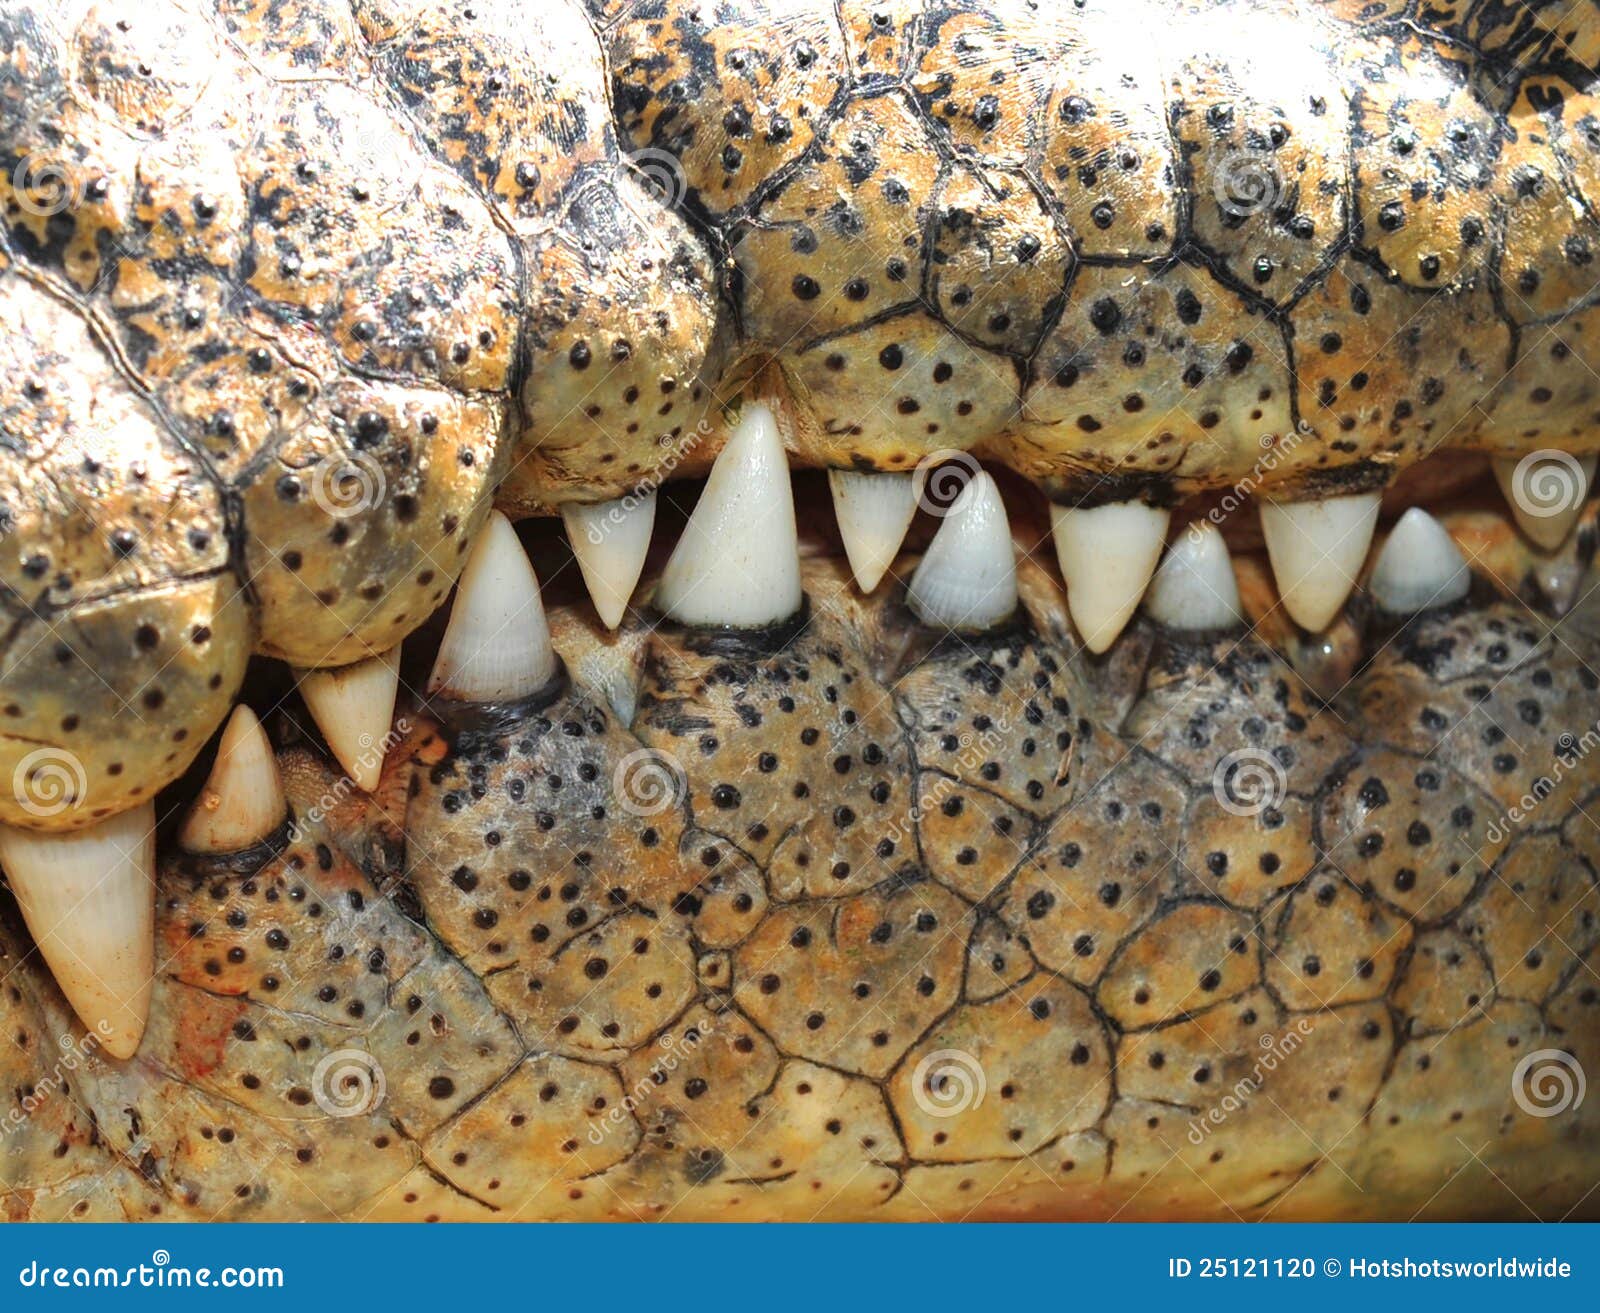 saltwater crocodile teeth ,queensland,australia